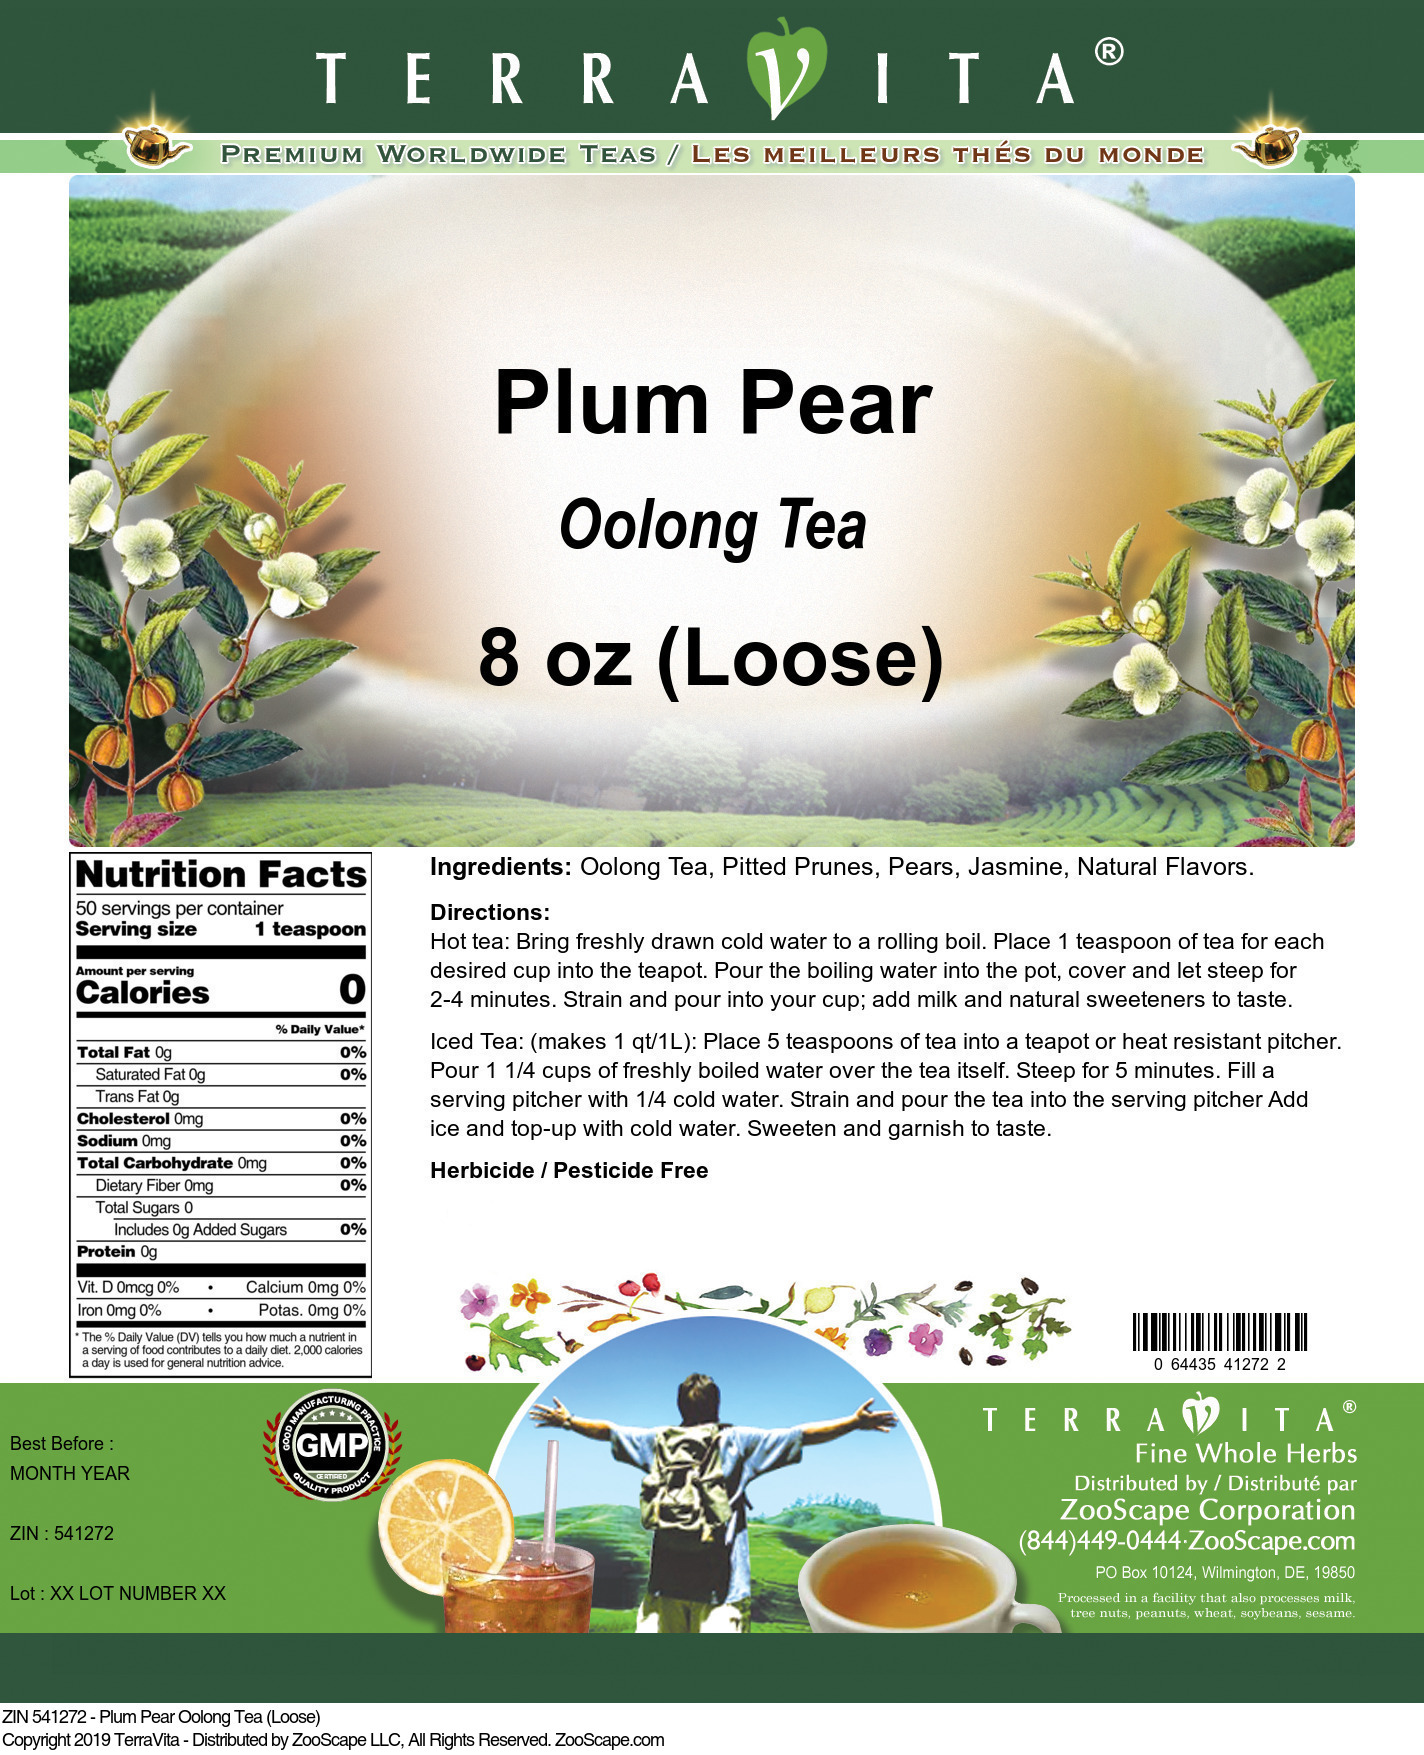 Plum Pear Oolong Tea (Loose) - Label